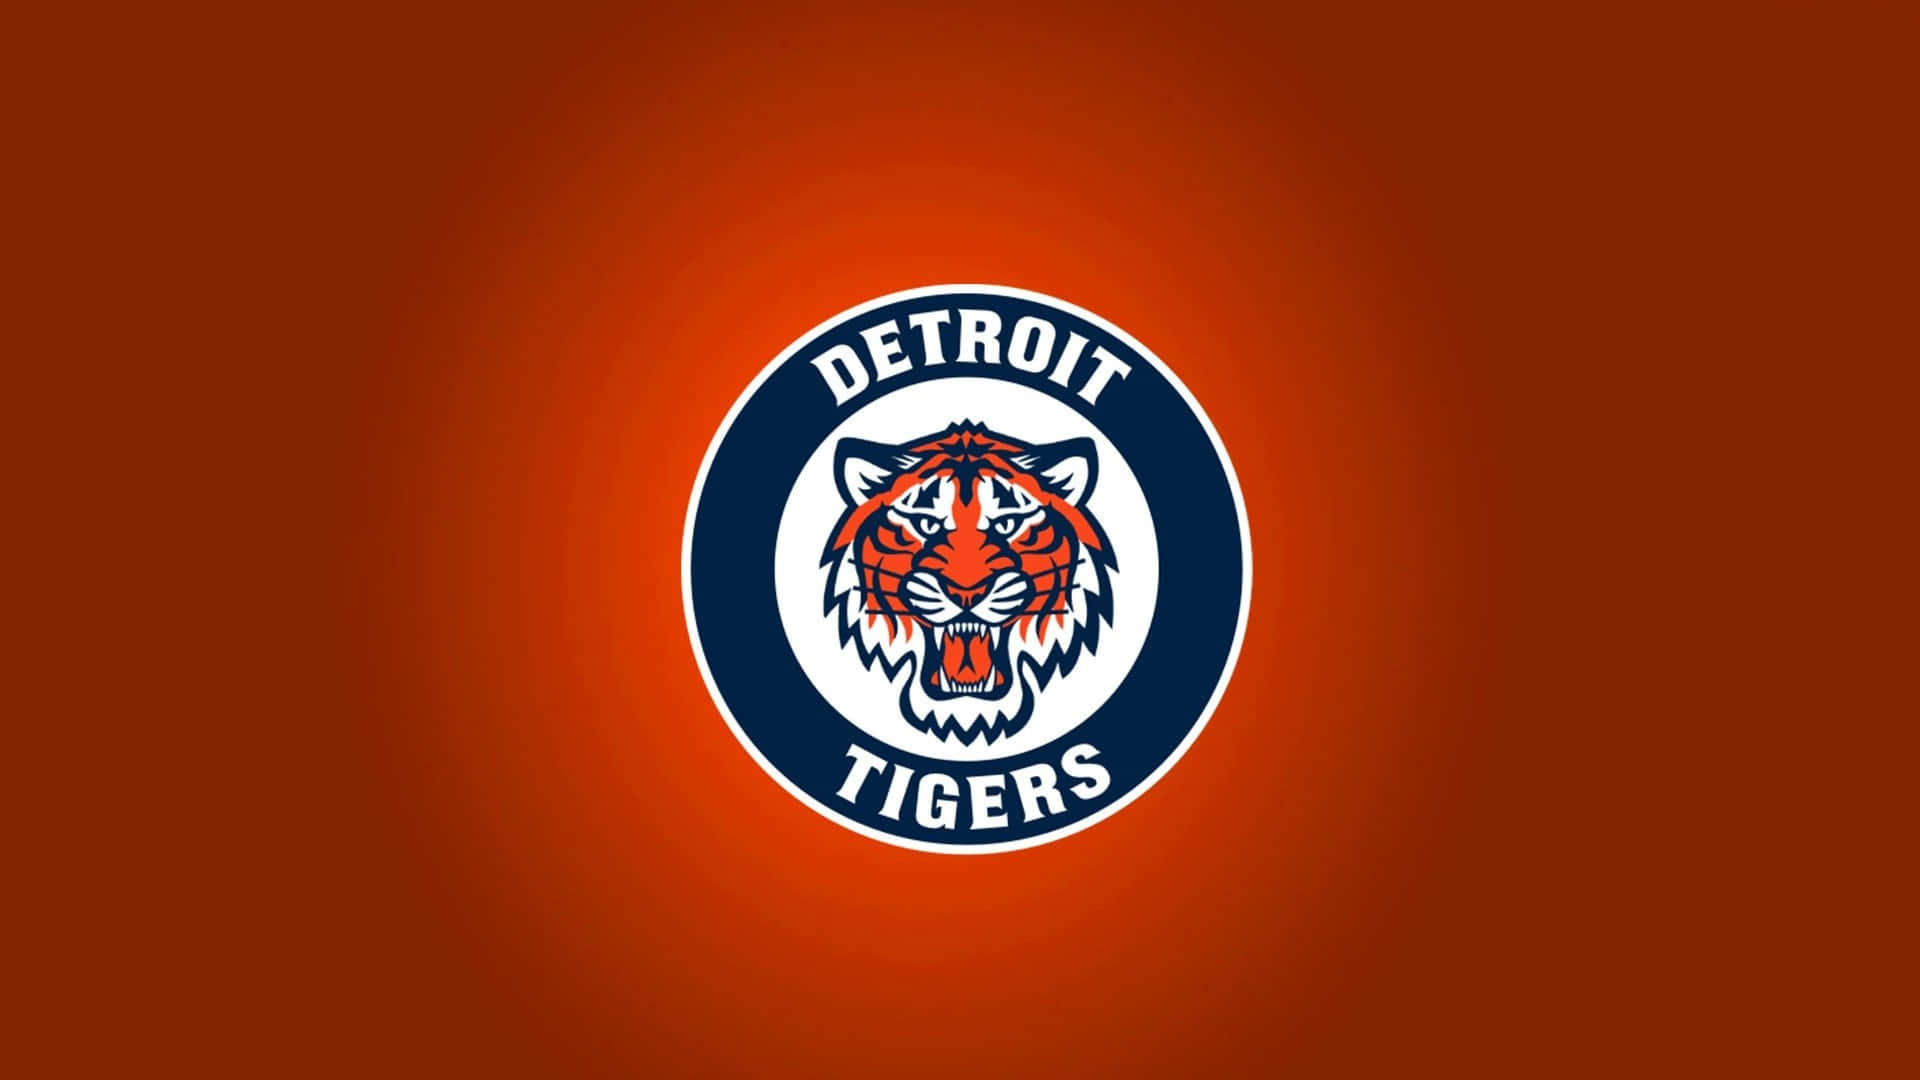 Detroit Tigers 2019 Wallpapers - Wallpaper Cave